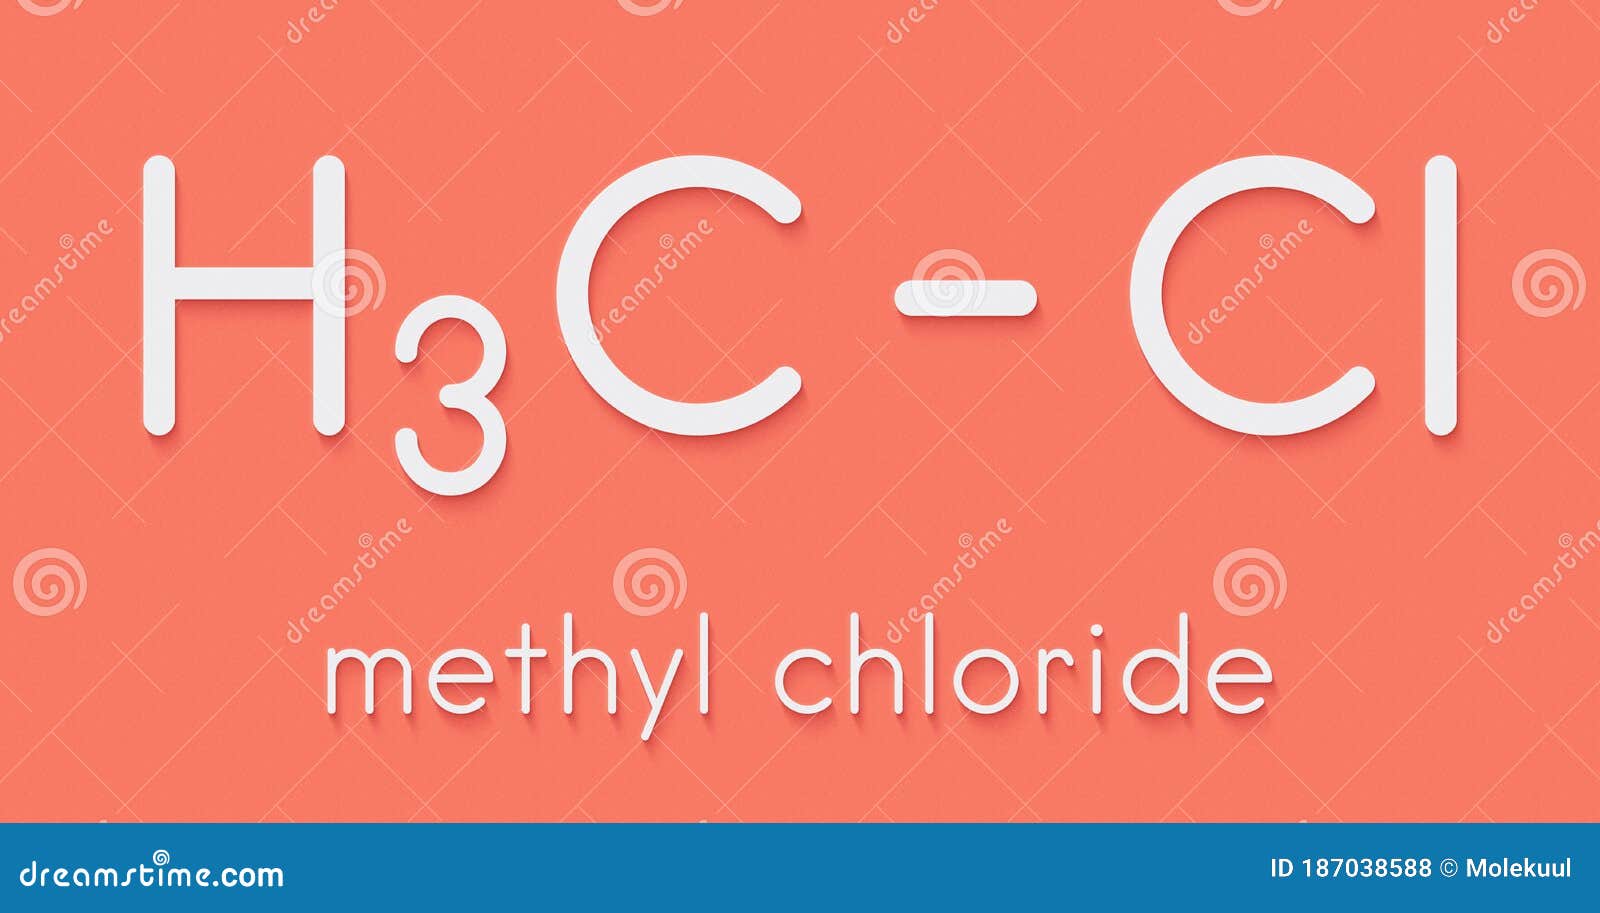 Chloromethane Methyl Chloride Molecule. Skeletal Formula. Stock ...